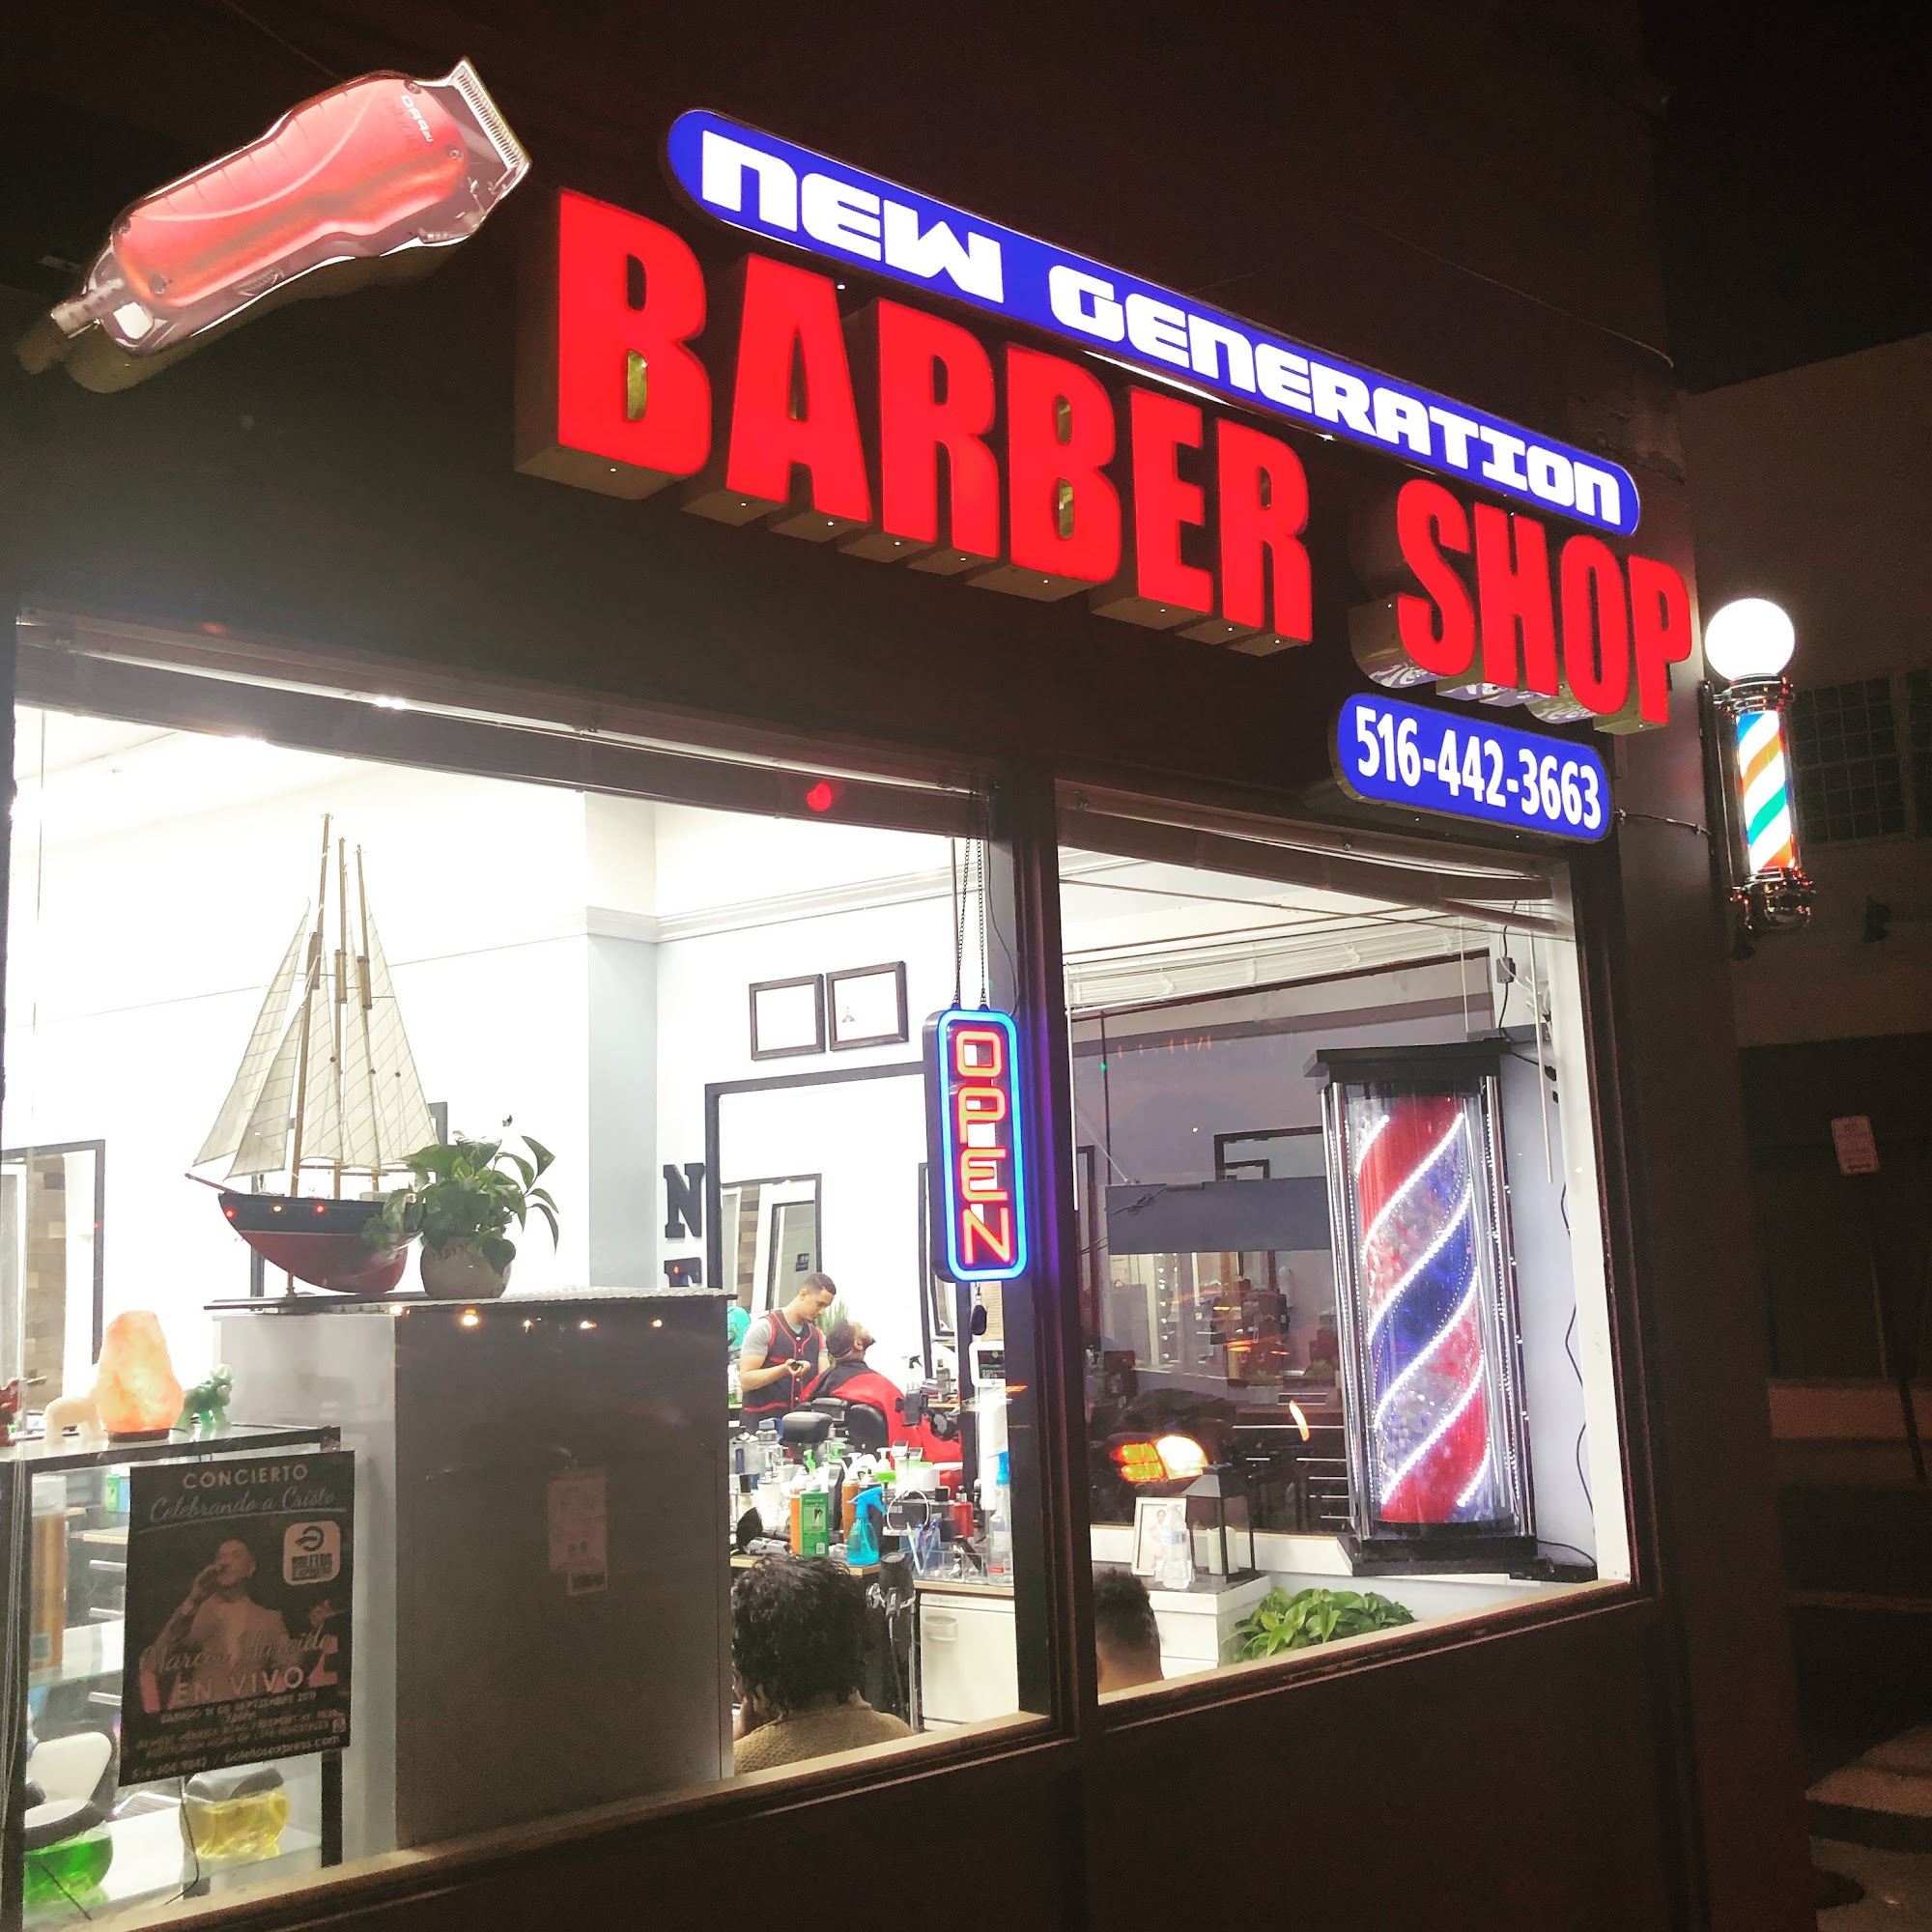 The New Generation Barbershop